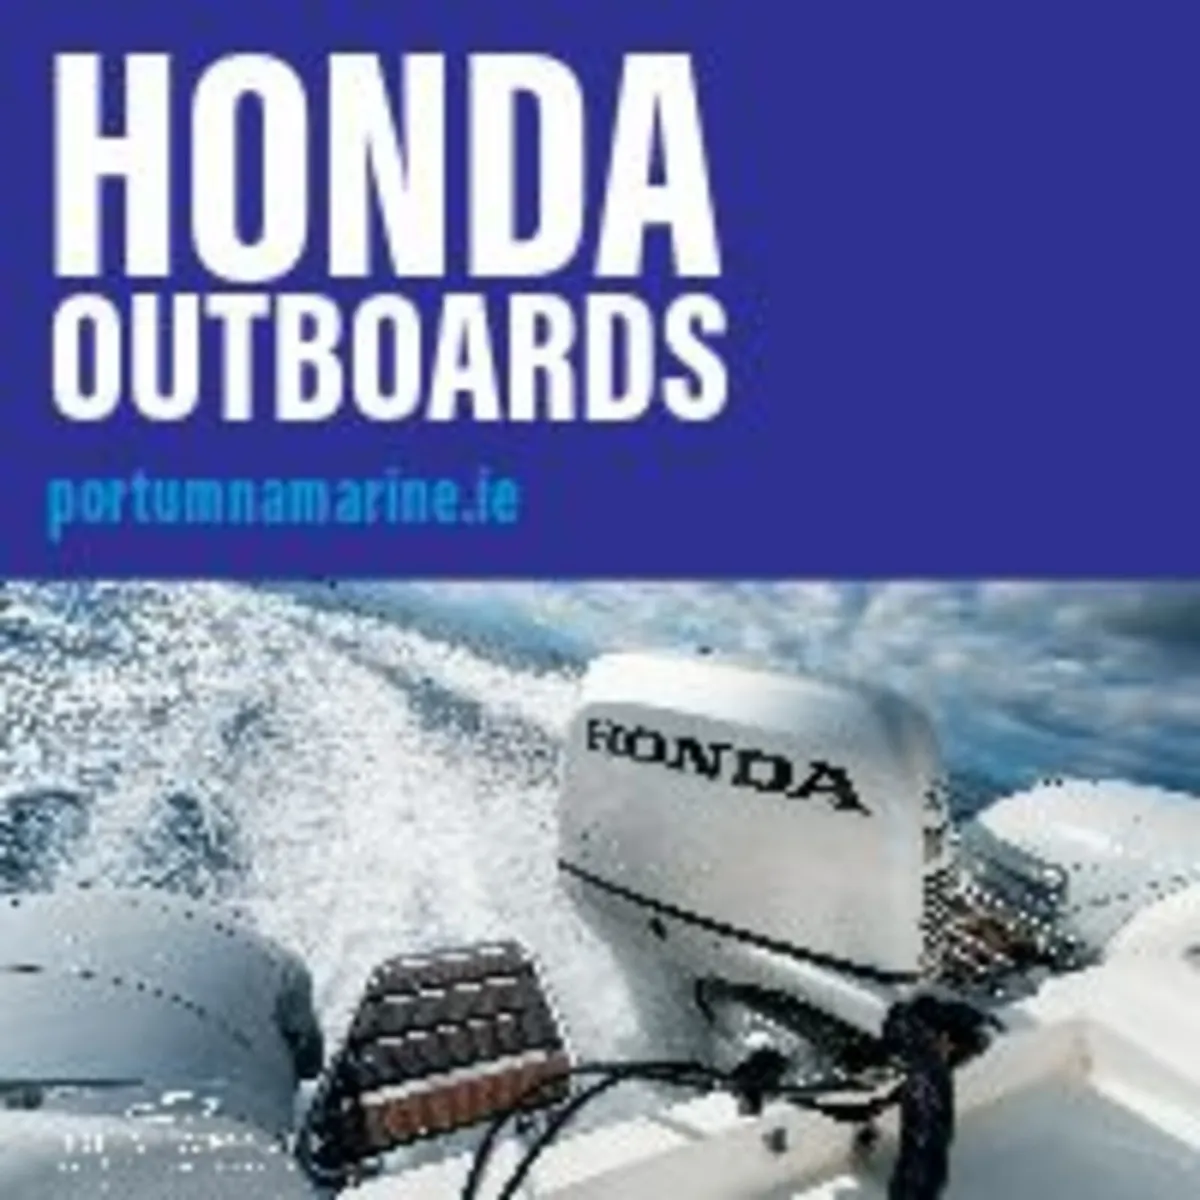 Honda Outboard Motors at Portumna Marine